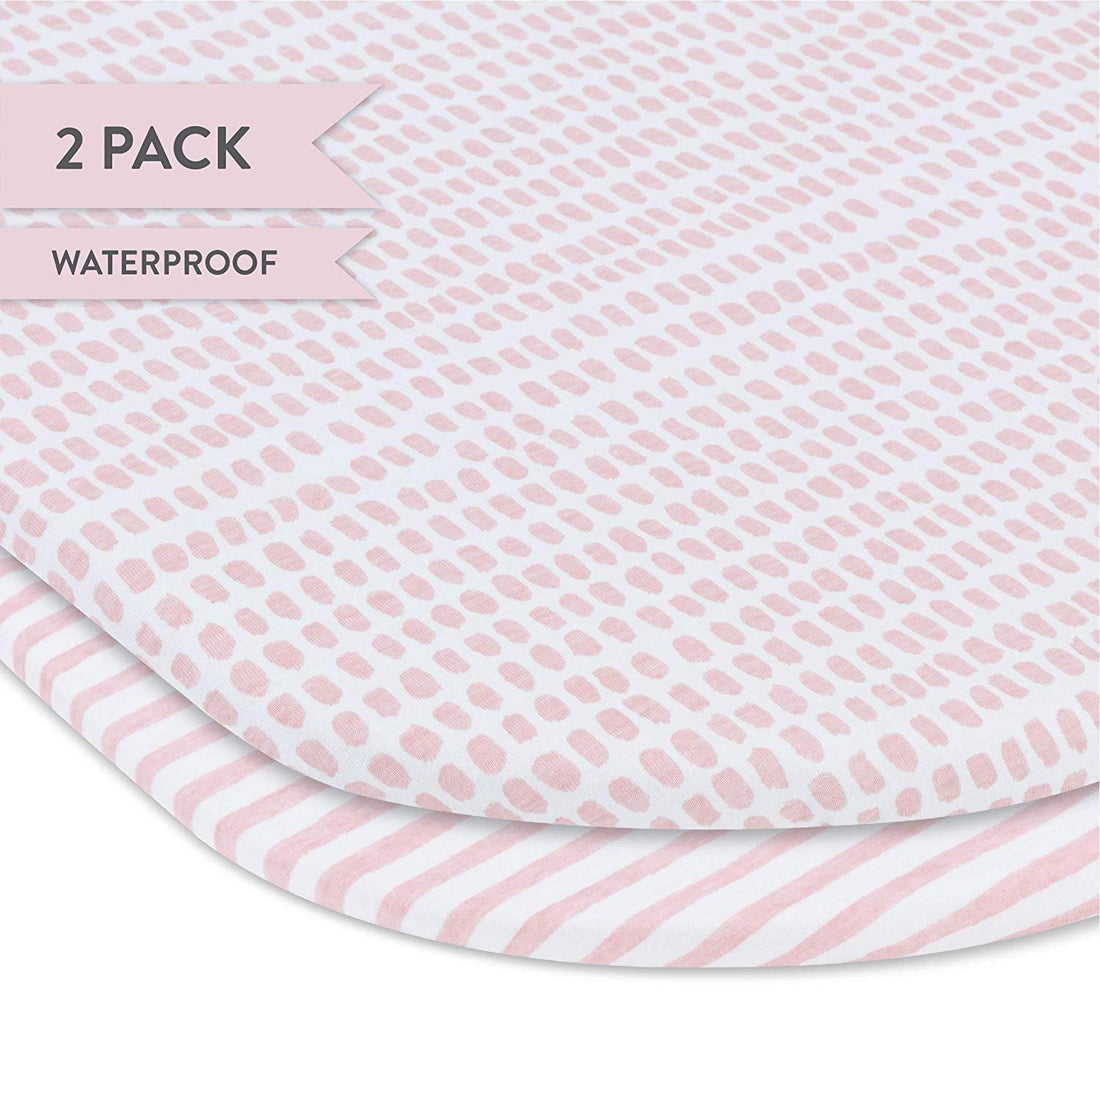 Ely's & Co. Waterproof Bassinet Sheet, 2 Pack Mauve Stripes & Splash